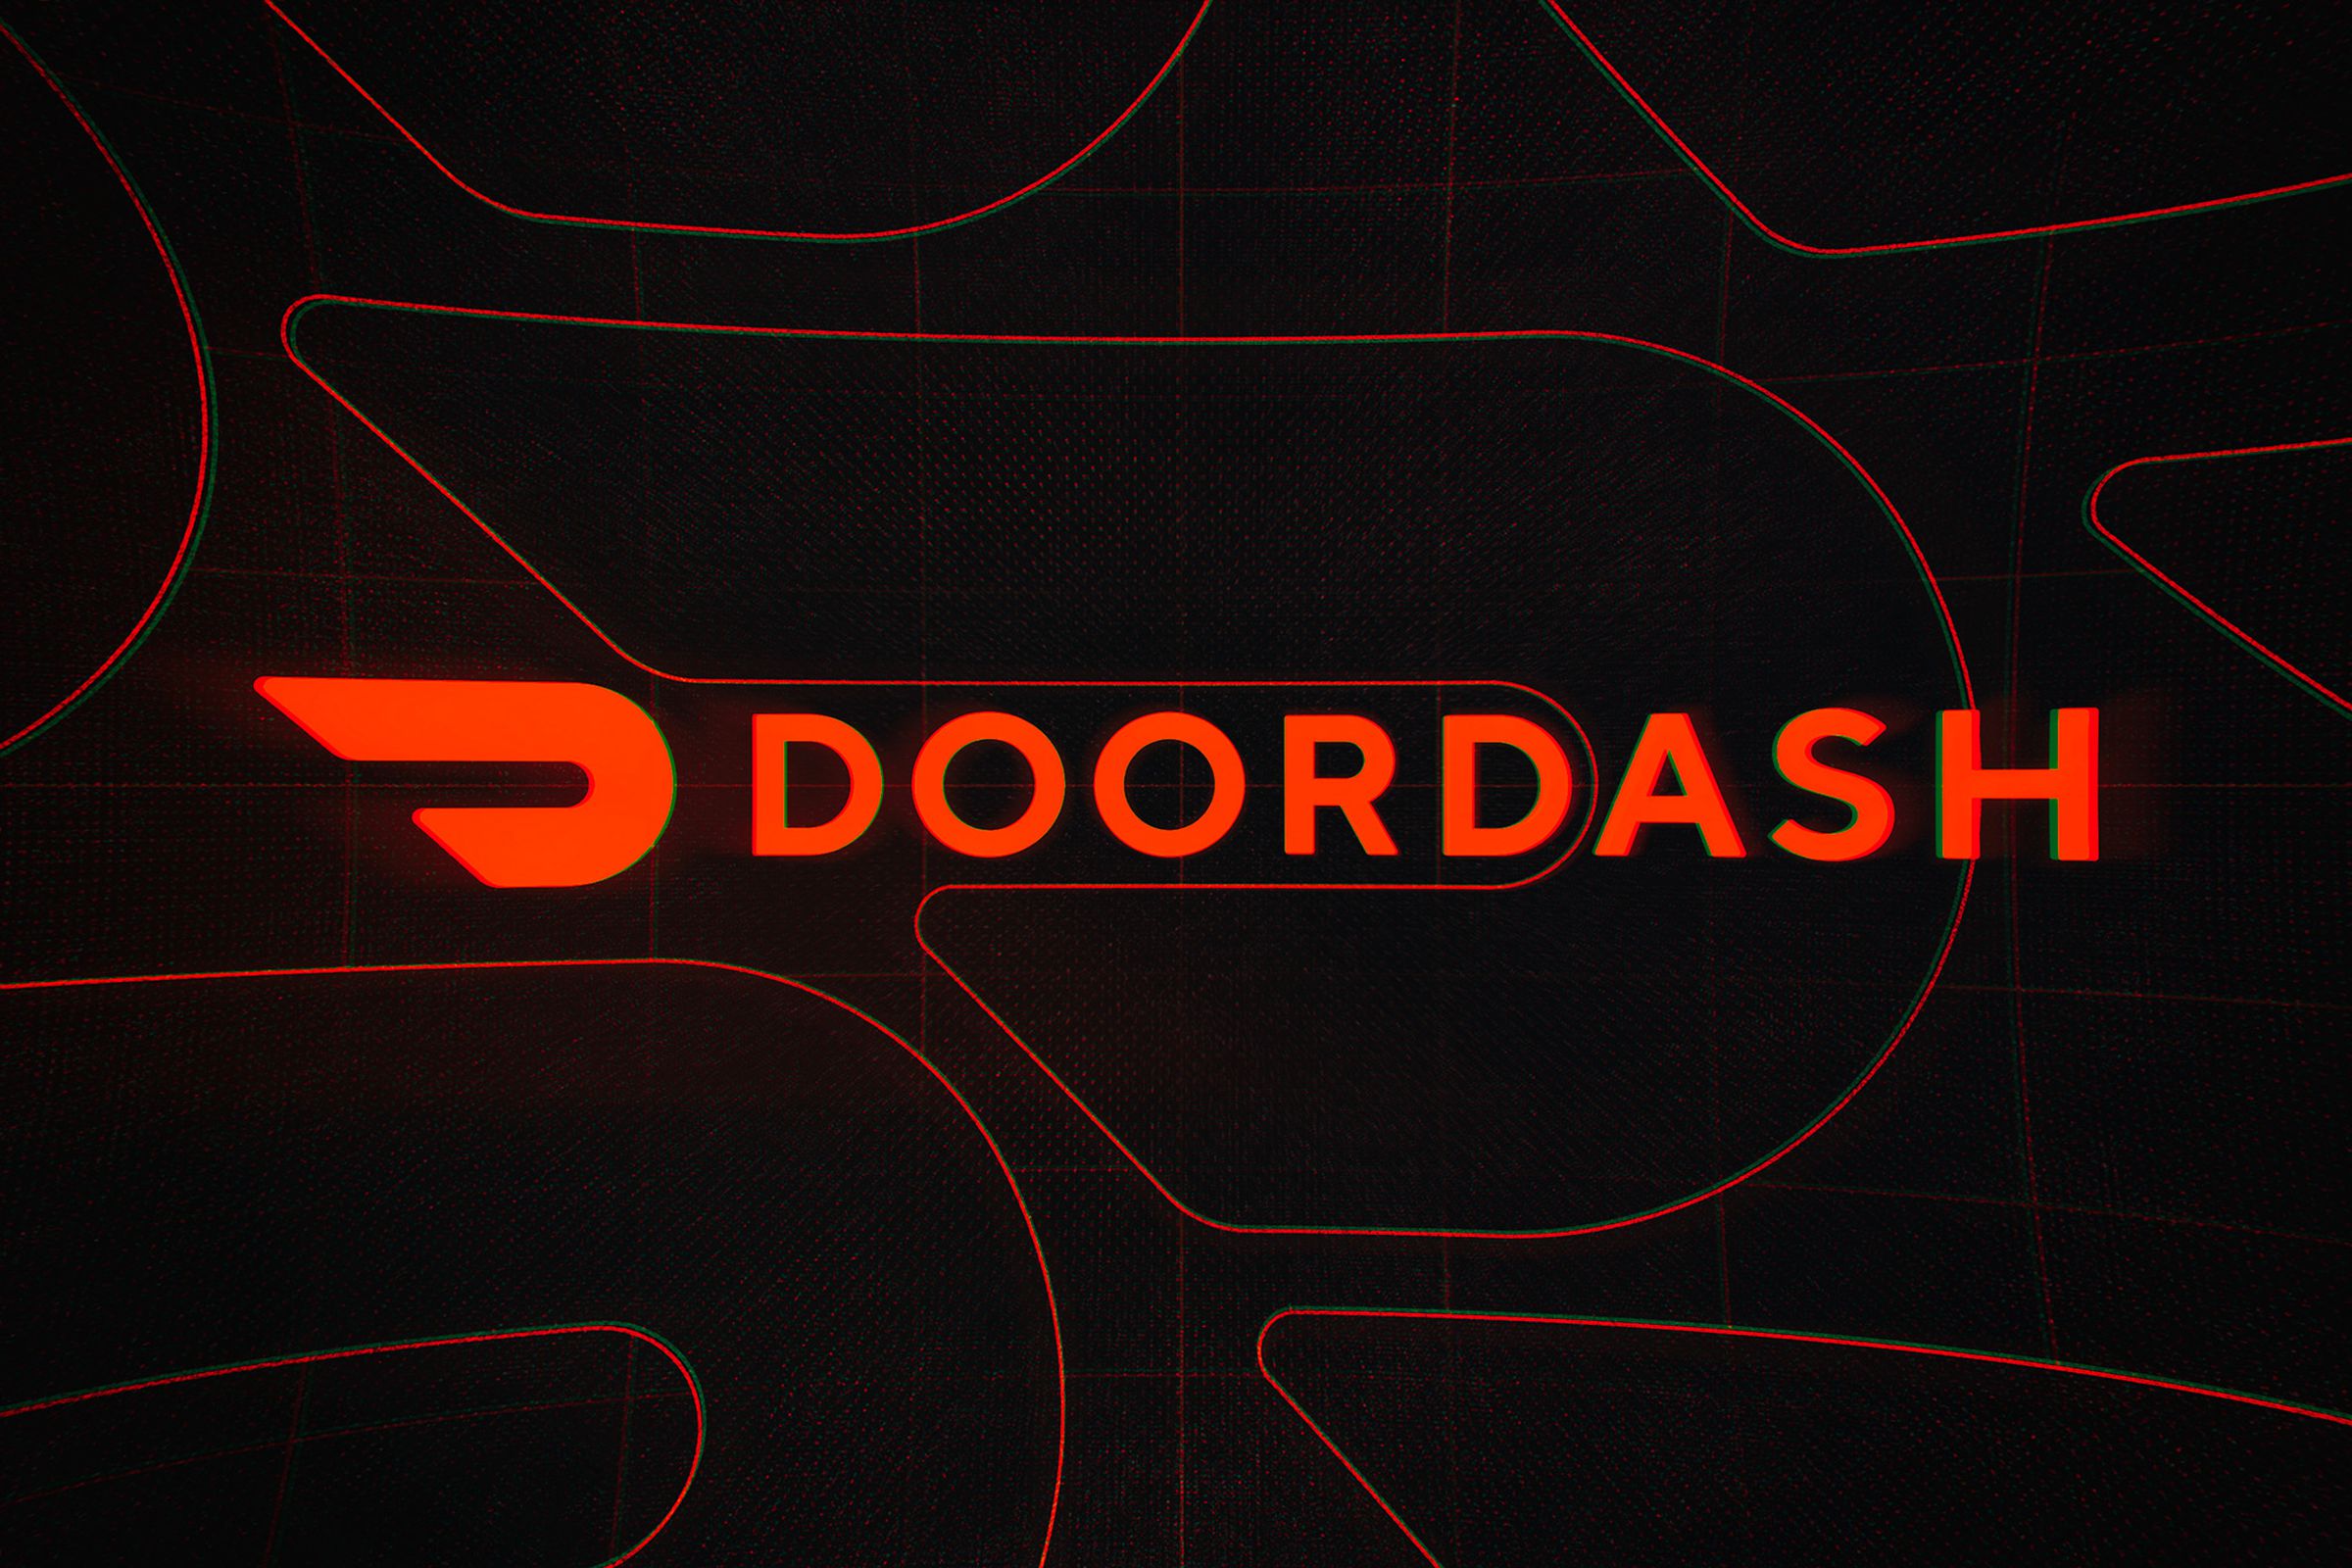 DoorDash settled with San Francisco for $5.3 million